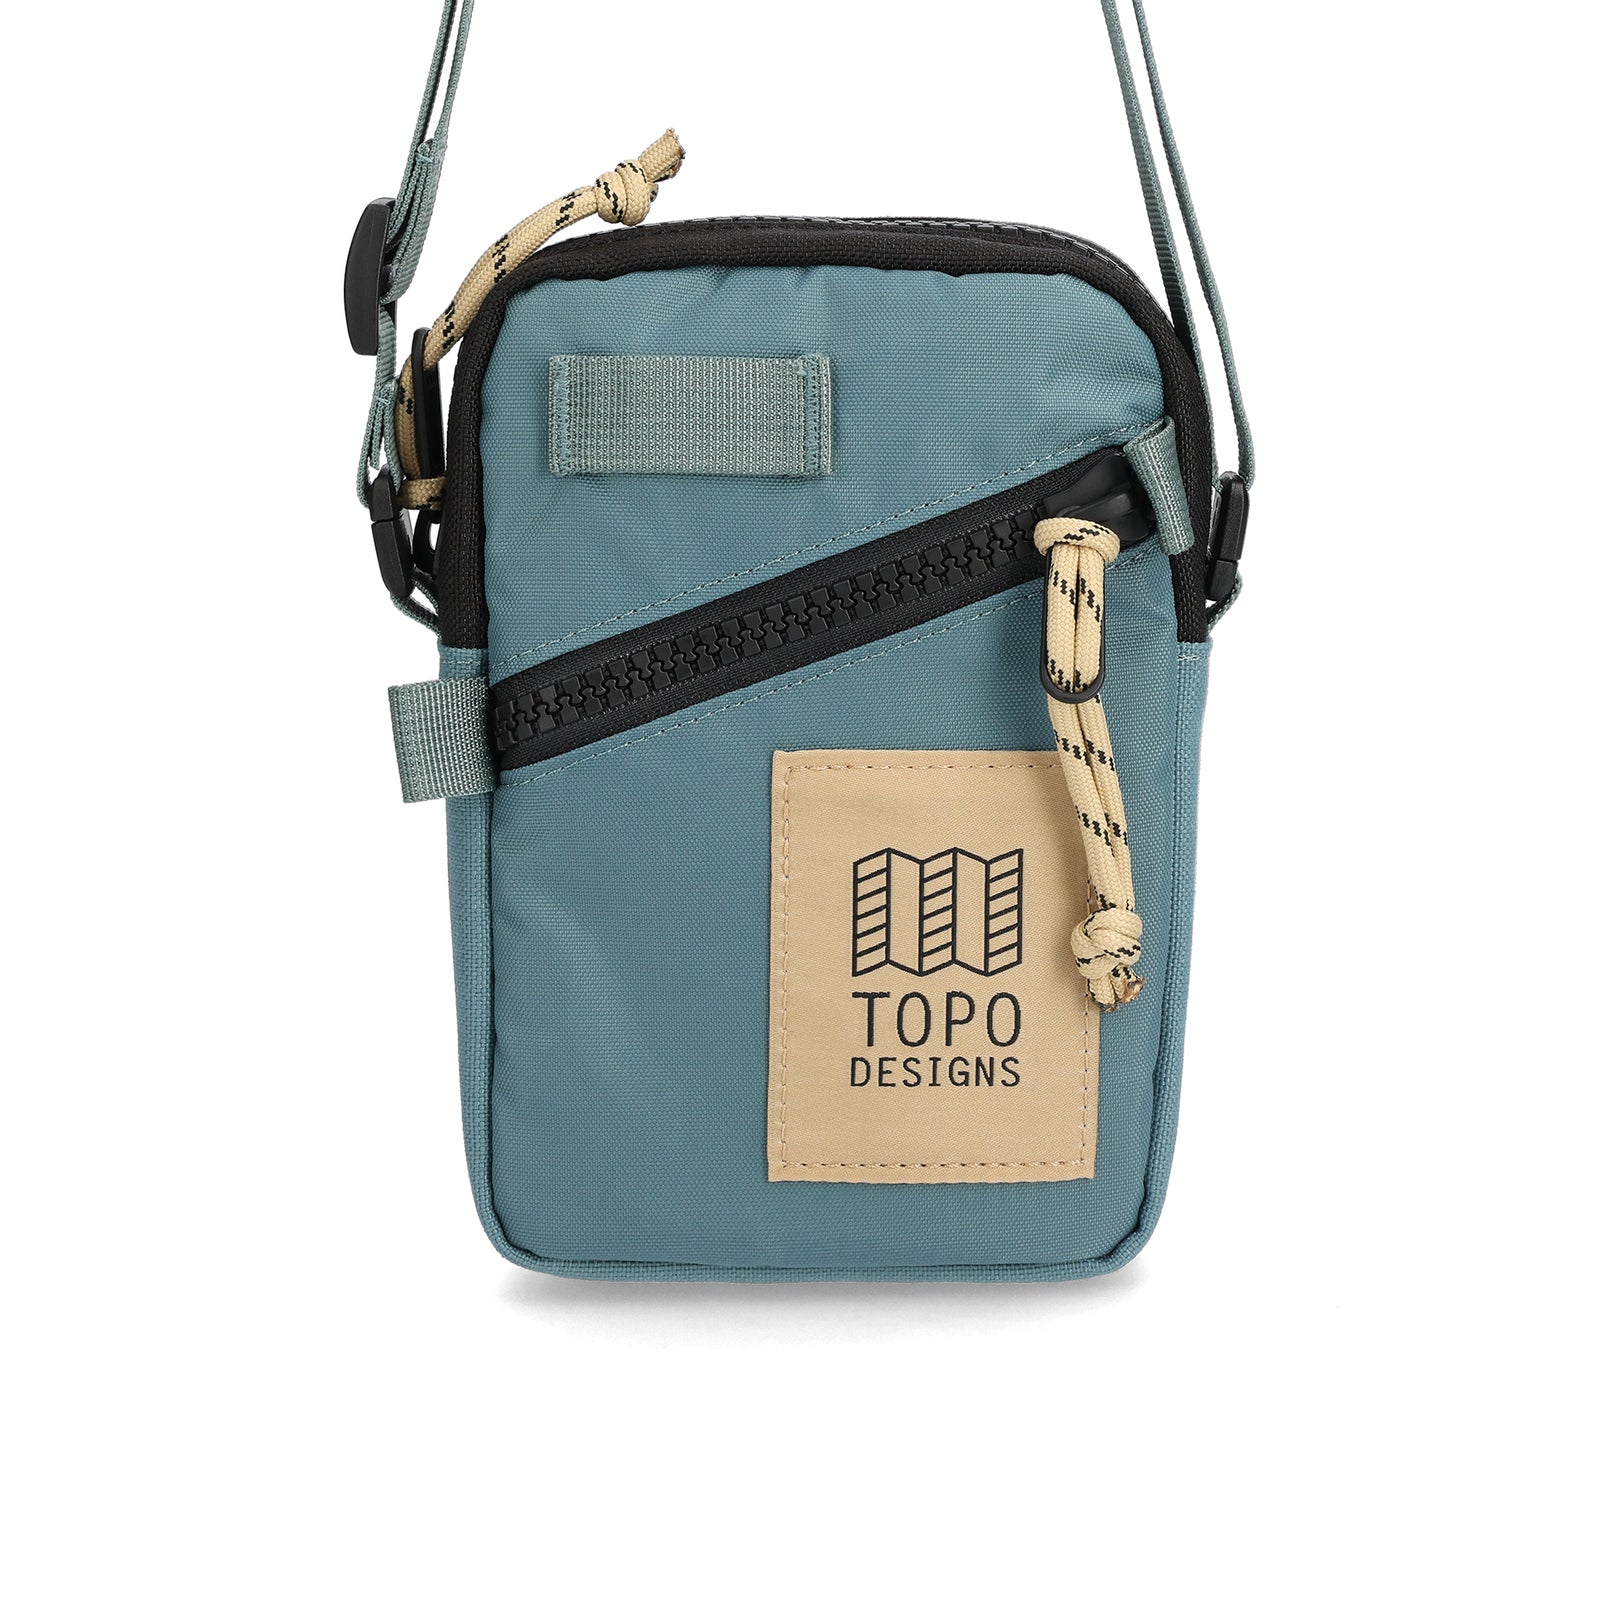 Front View of Topo Designs Mini Shoulder Bag in "Sea Pine"